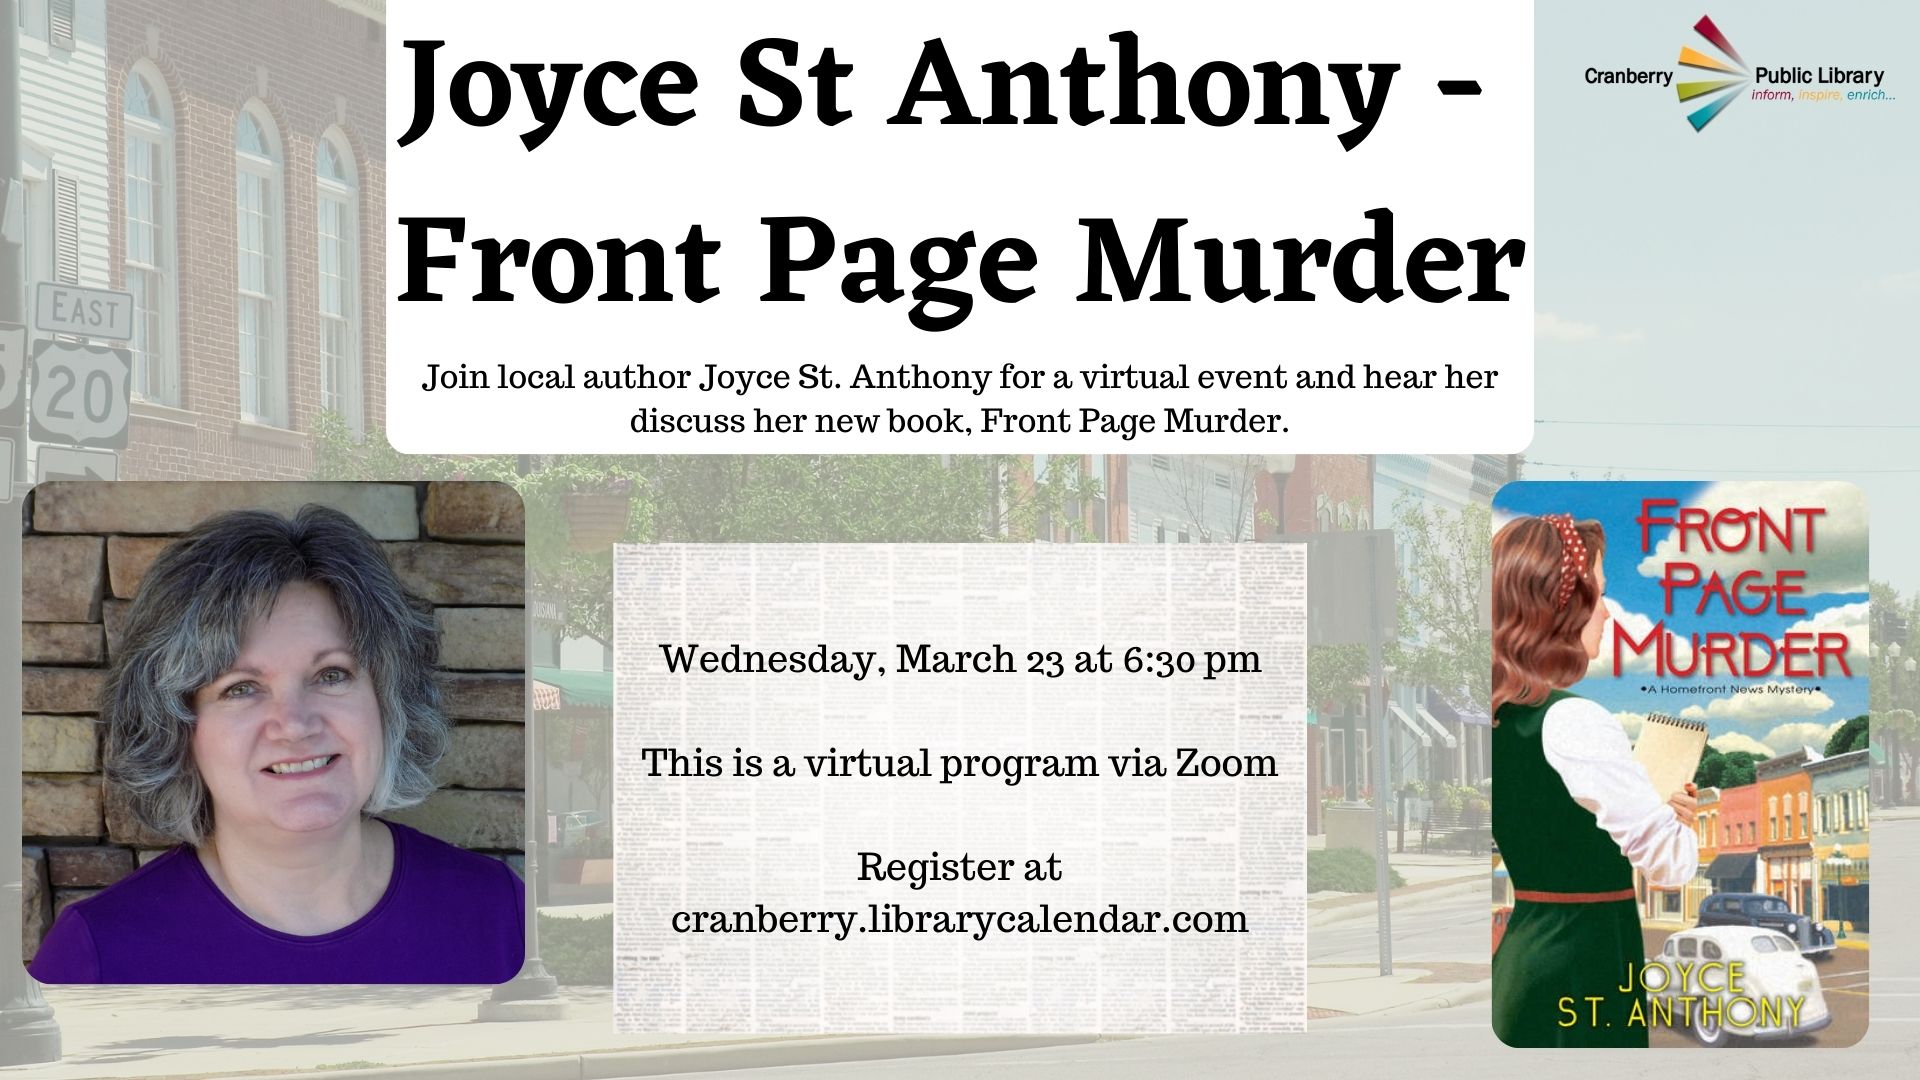 Flyer for Joyce St Anthony Front Page Murder program